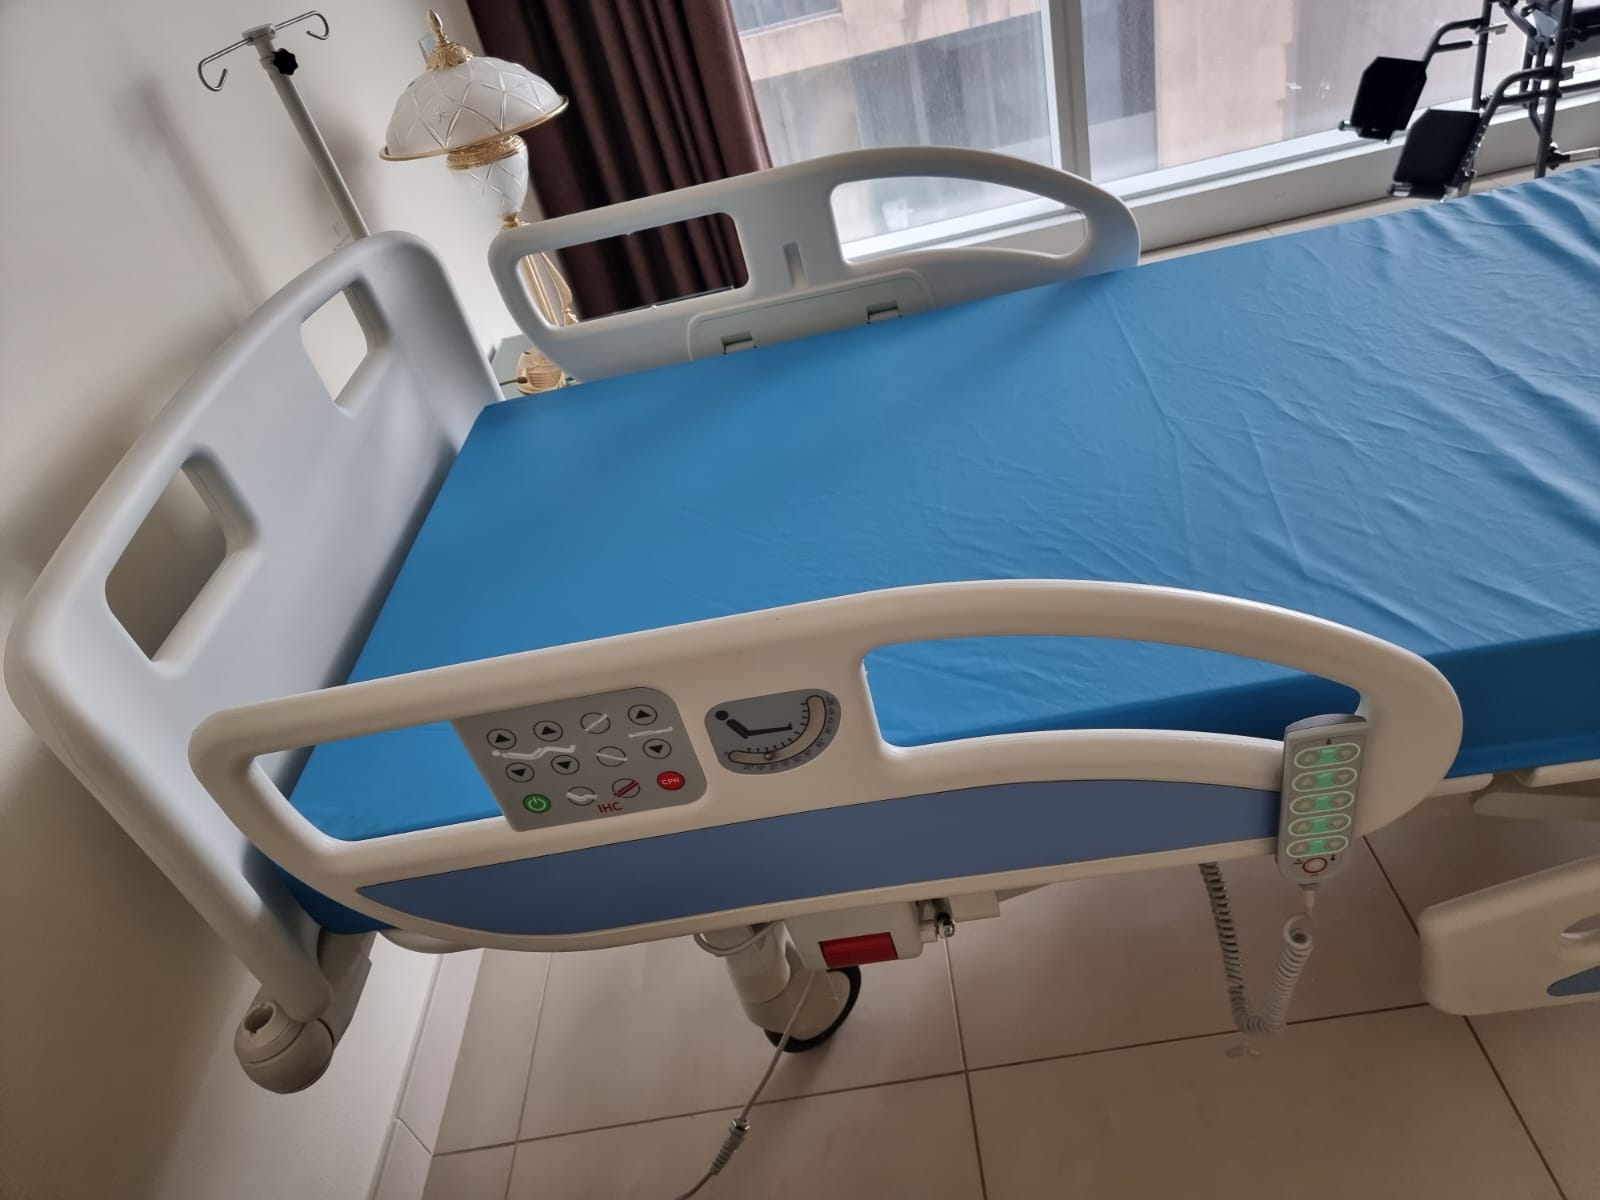 Unused Dolson Hospital Electric Bed